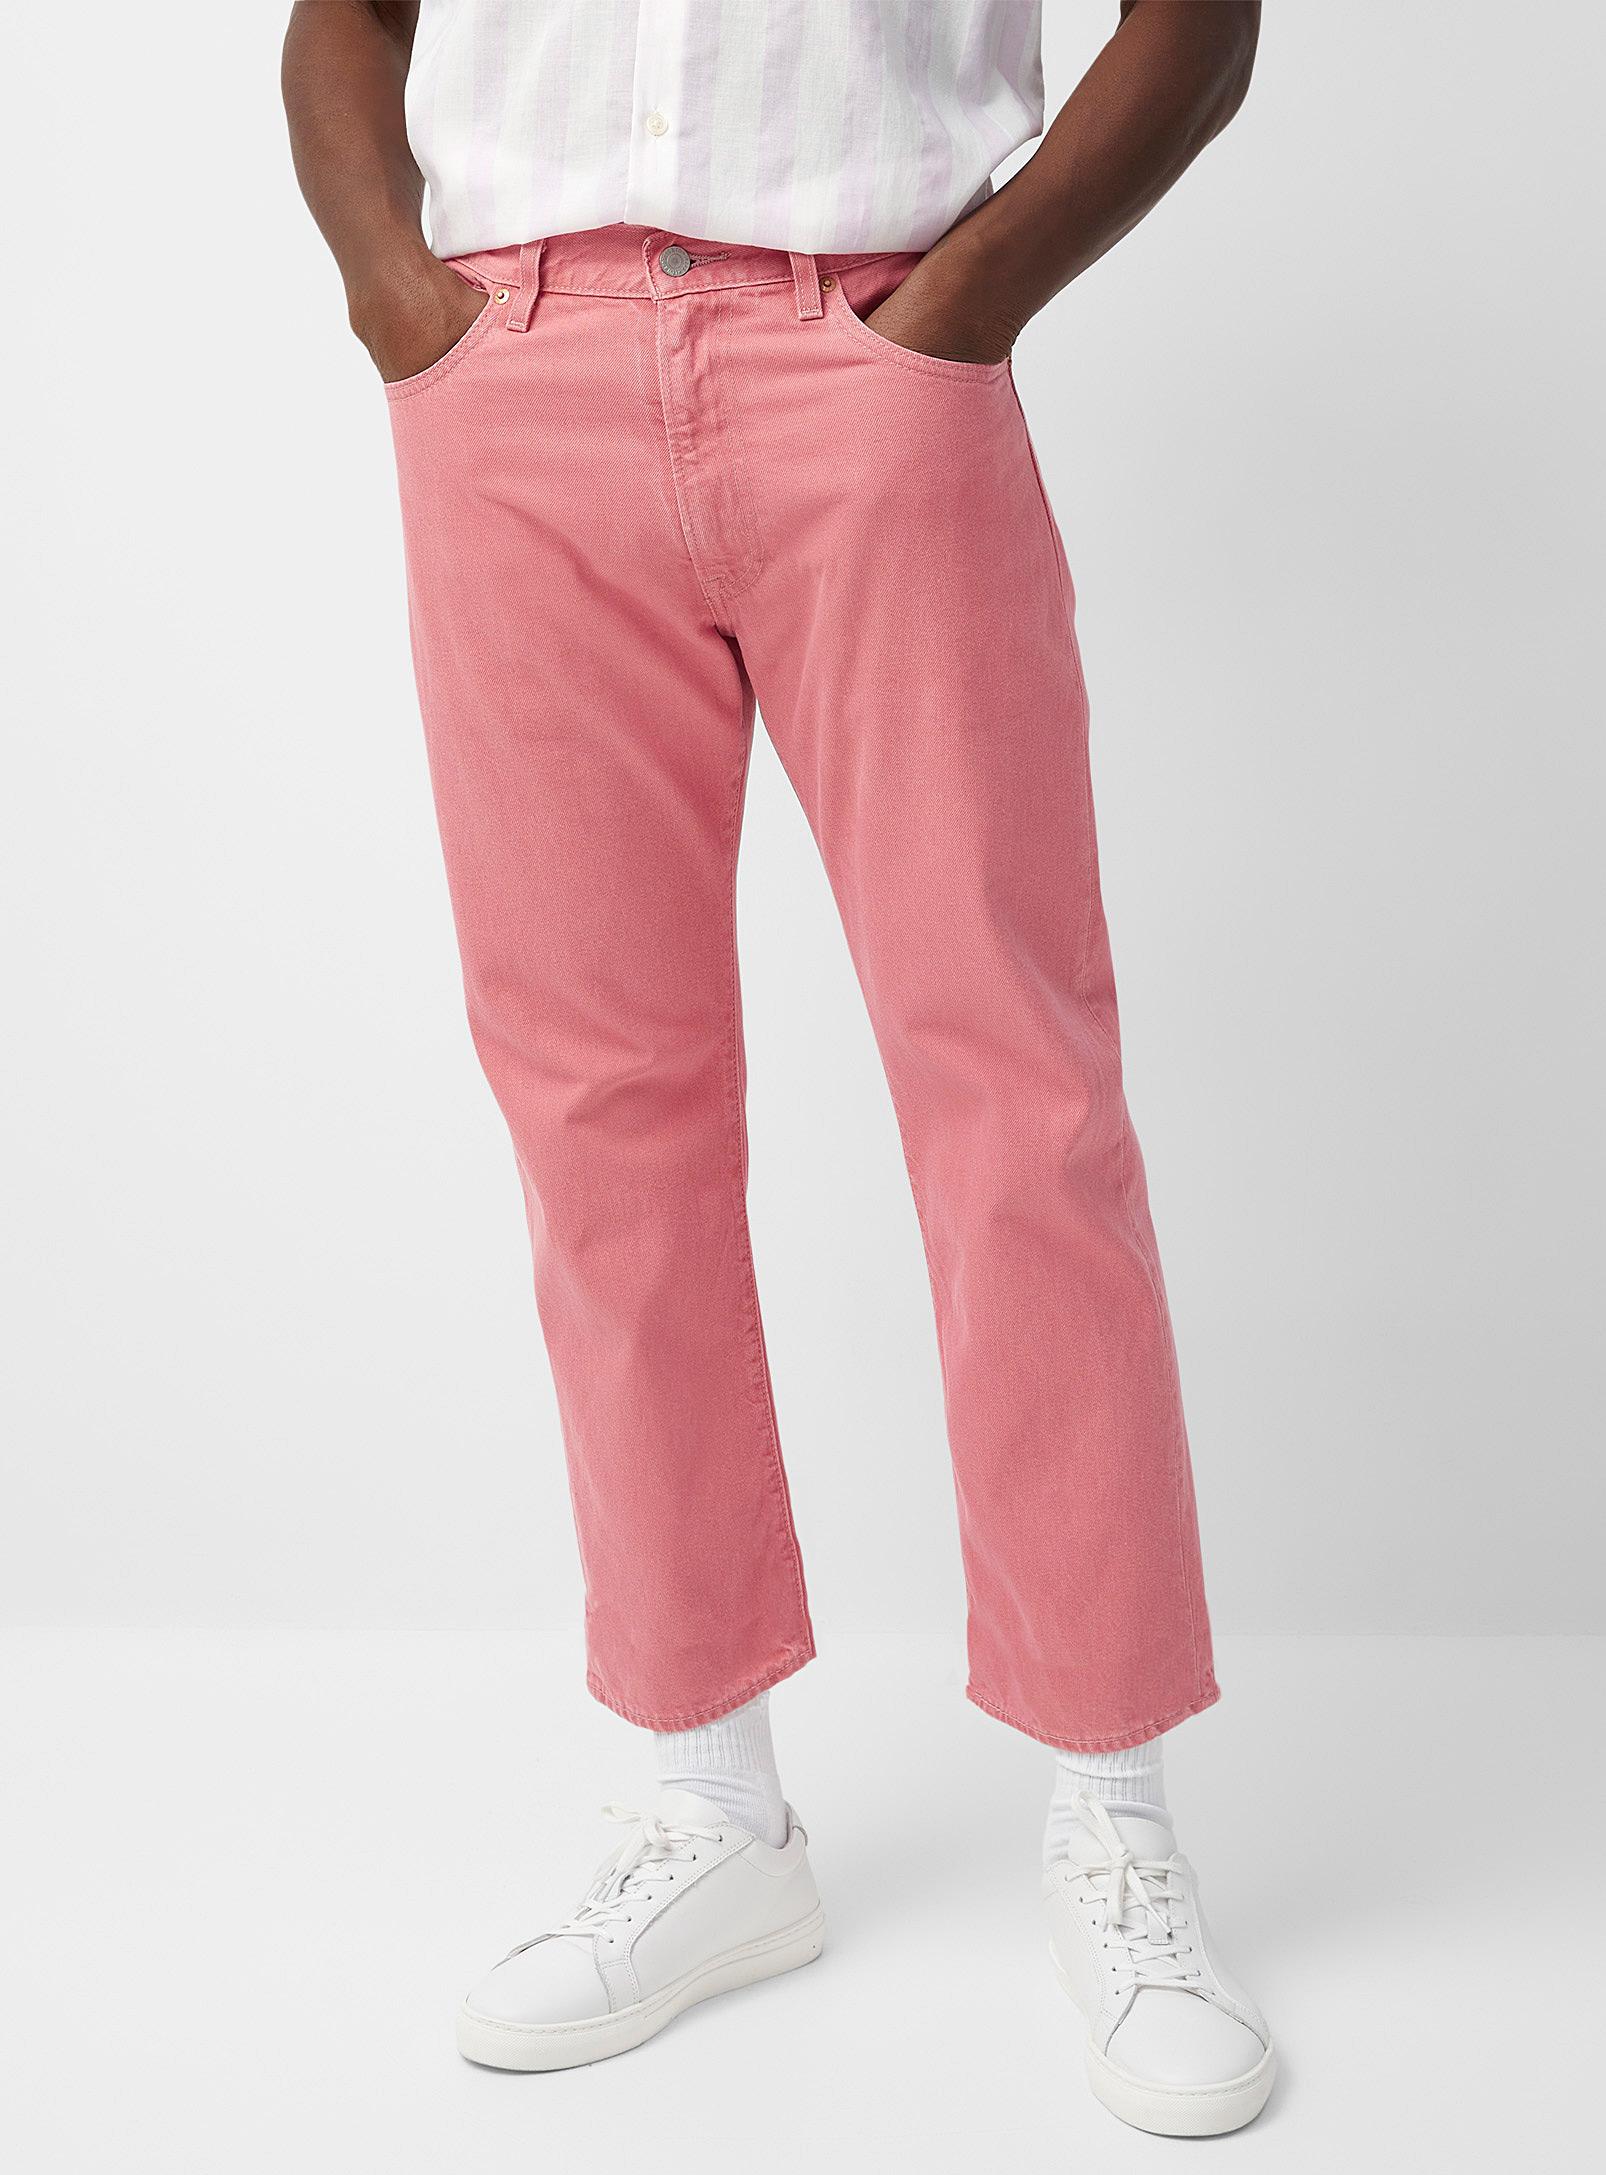 strukturelt Samlet Maleri Levi's Pink Denim 551 Jean Straight Fit for Men | Lyst